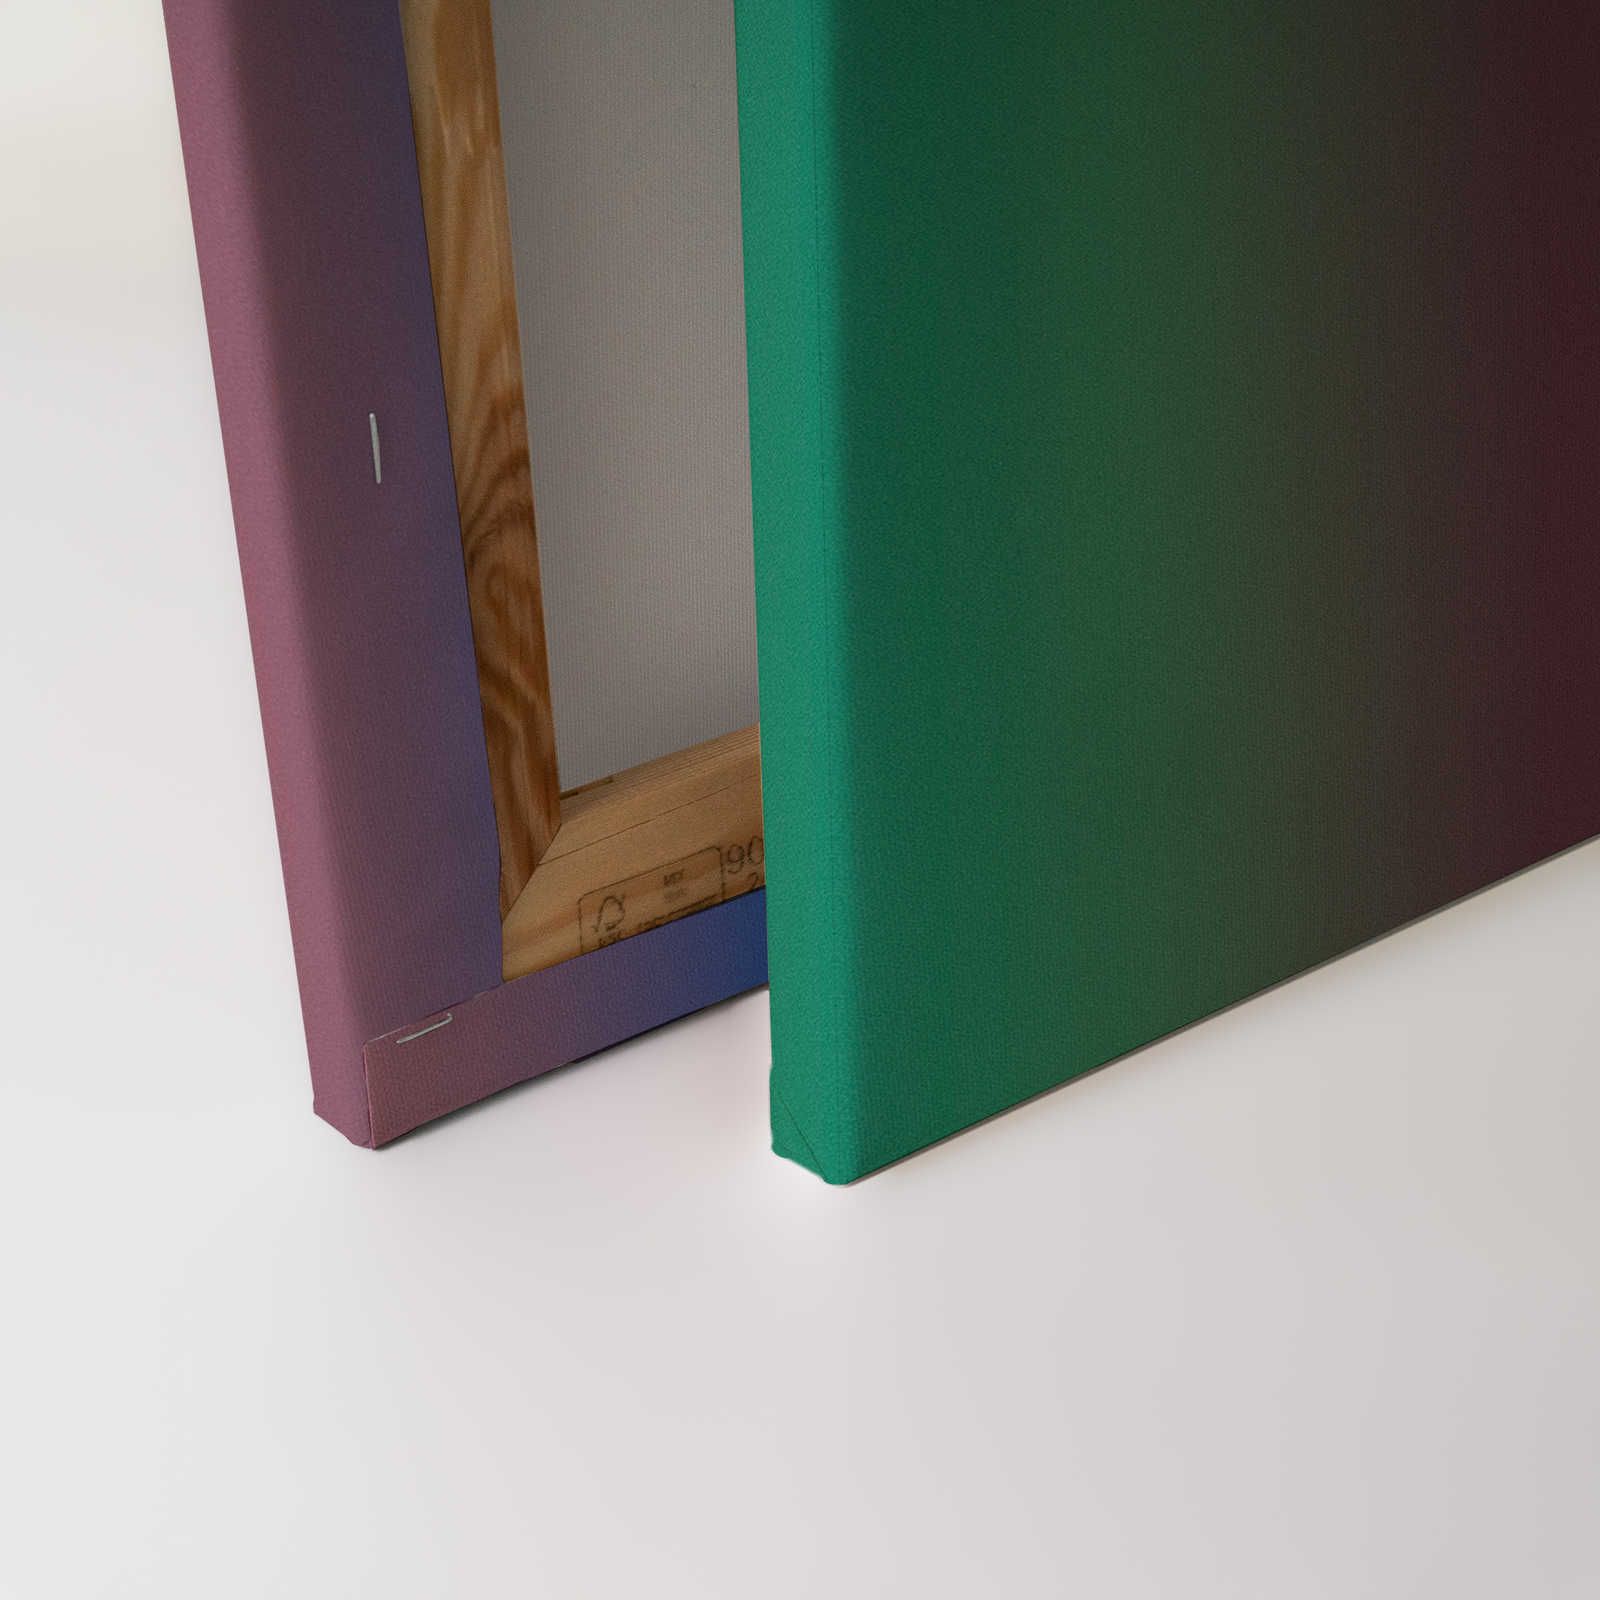             Over the Rainbow 2 - Farbverlauf Leinwandbild buntes Streifendesign – 1,20 m x 0,80 m
        